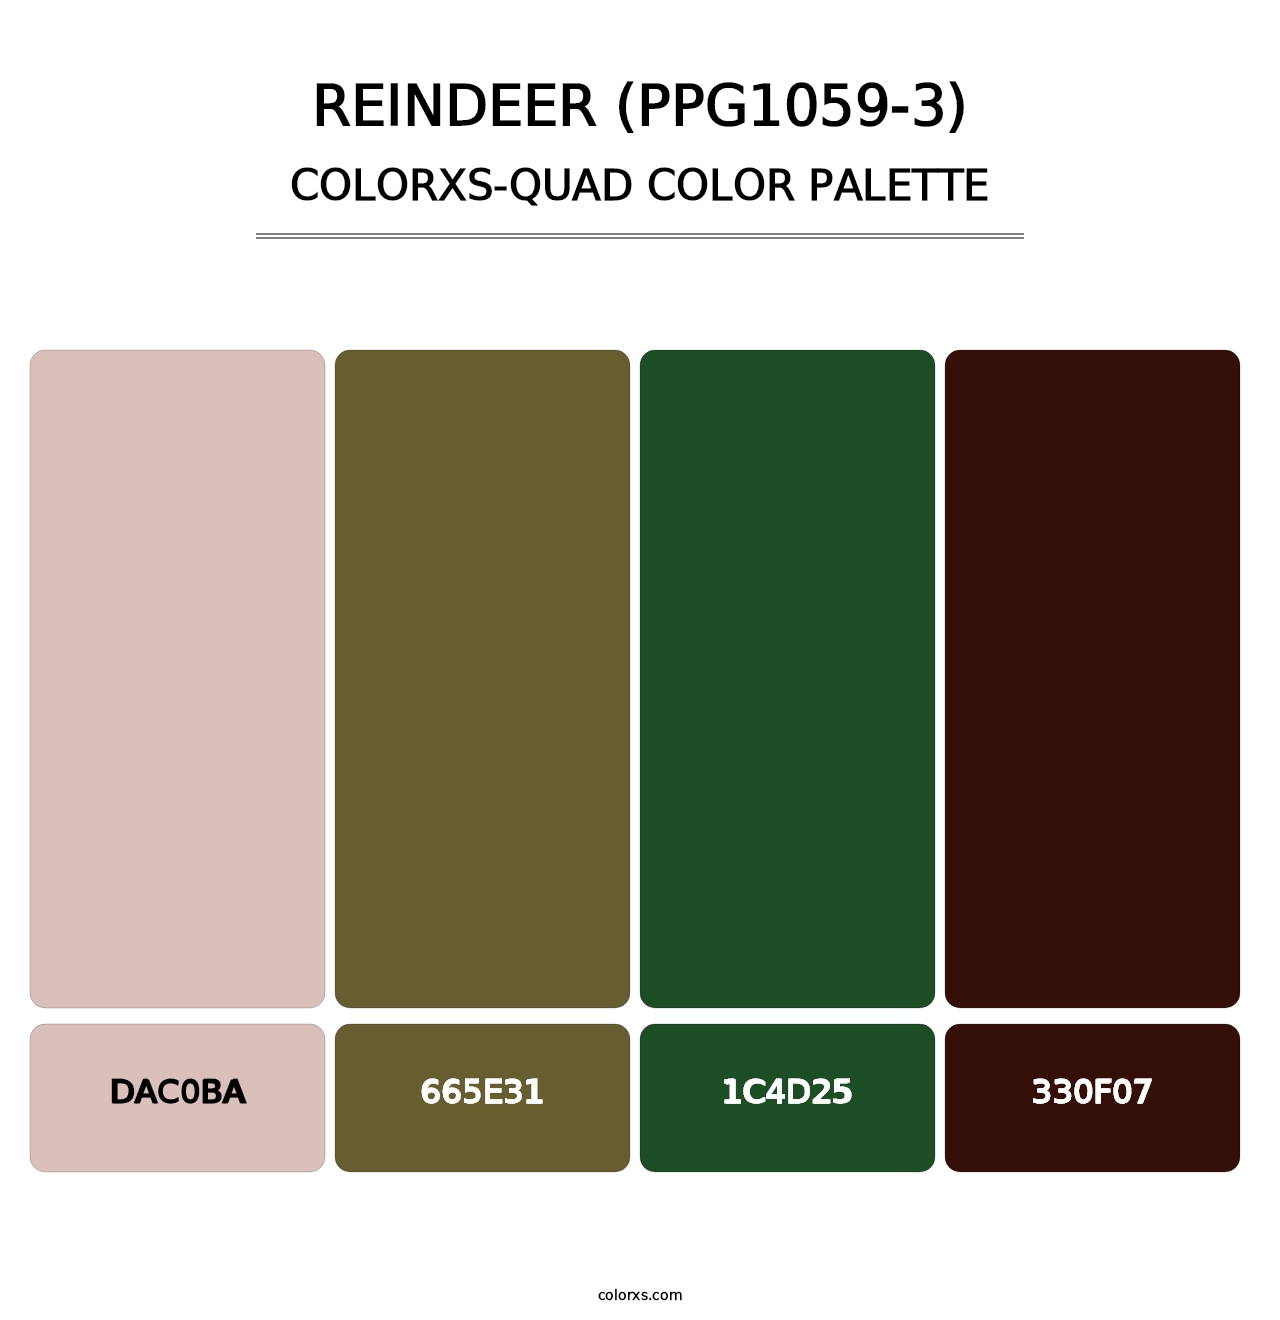 Reindeer (PPG1059-3) - Colorxs Quad Palette